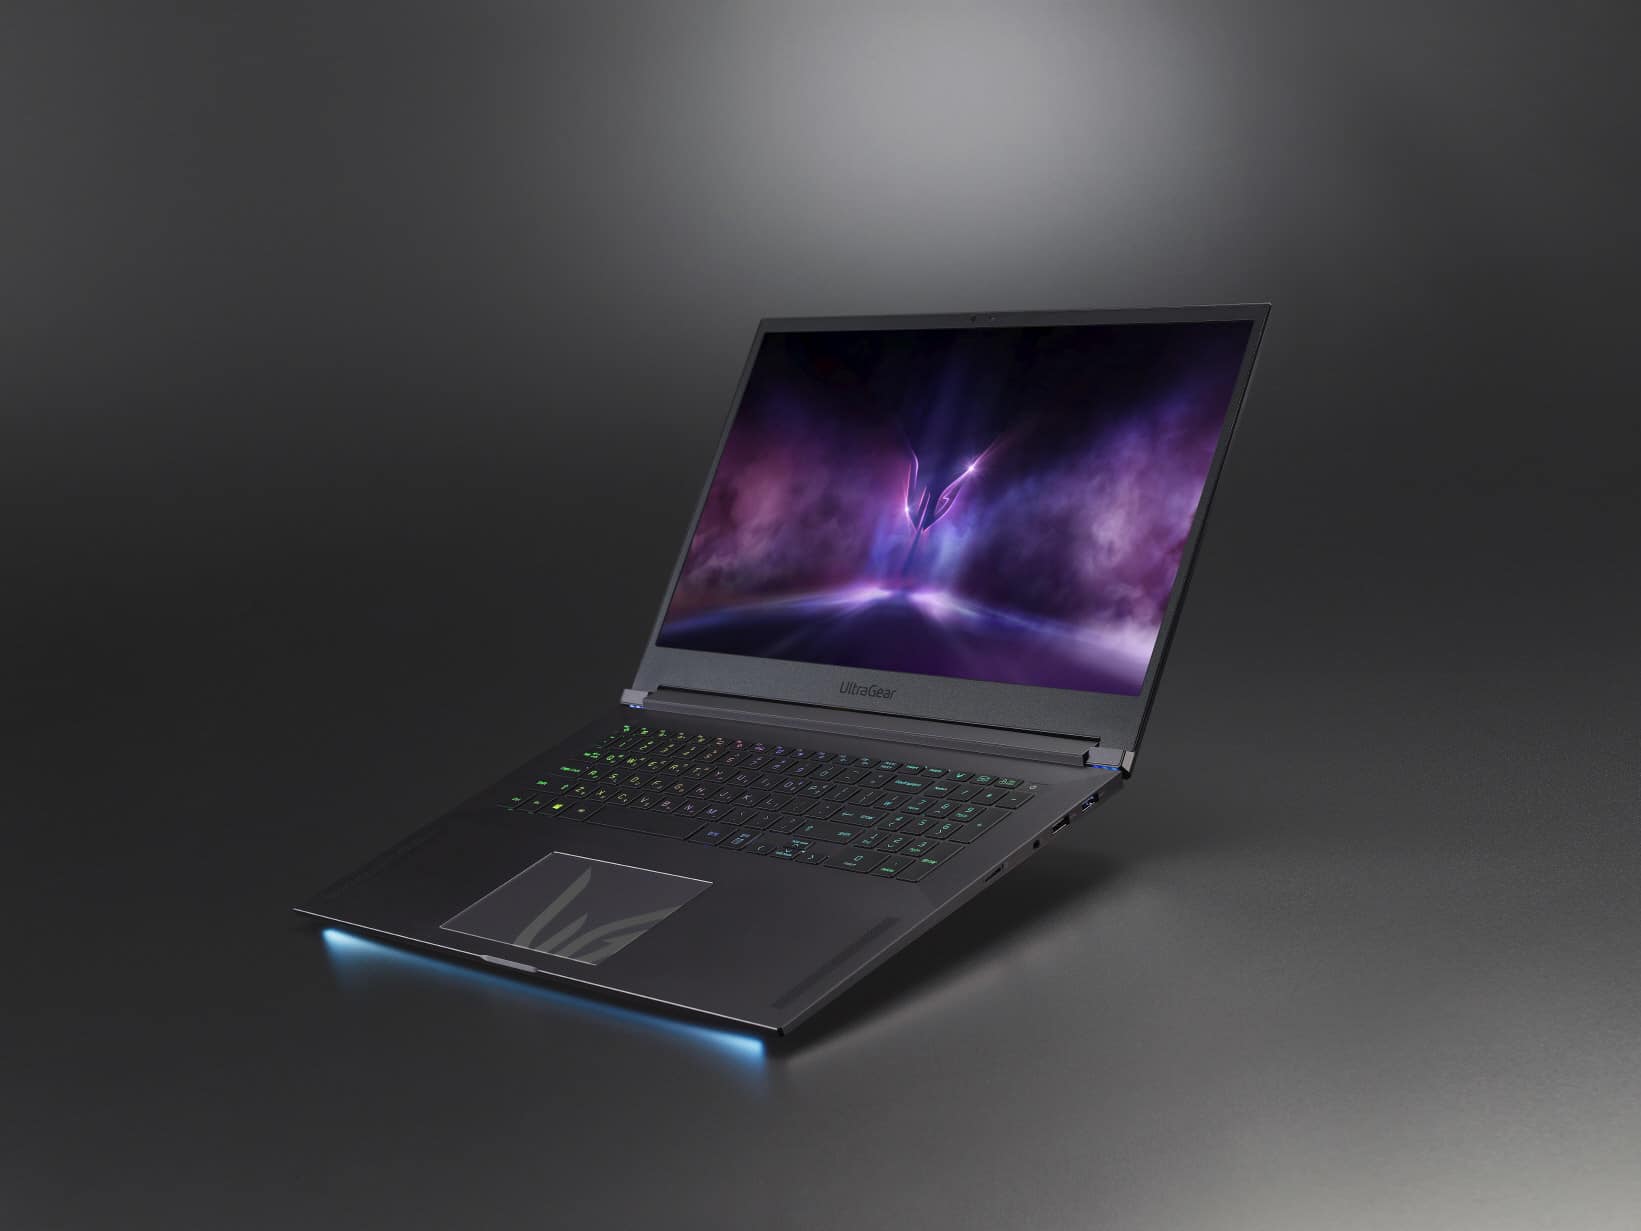 LG announce their first gaming laptop, the LG UltraGear 17G90Q